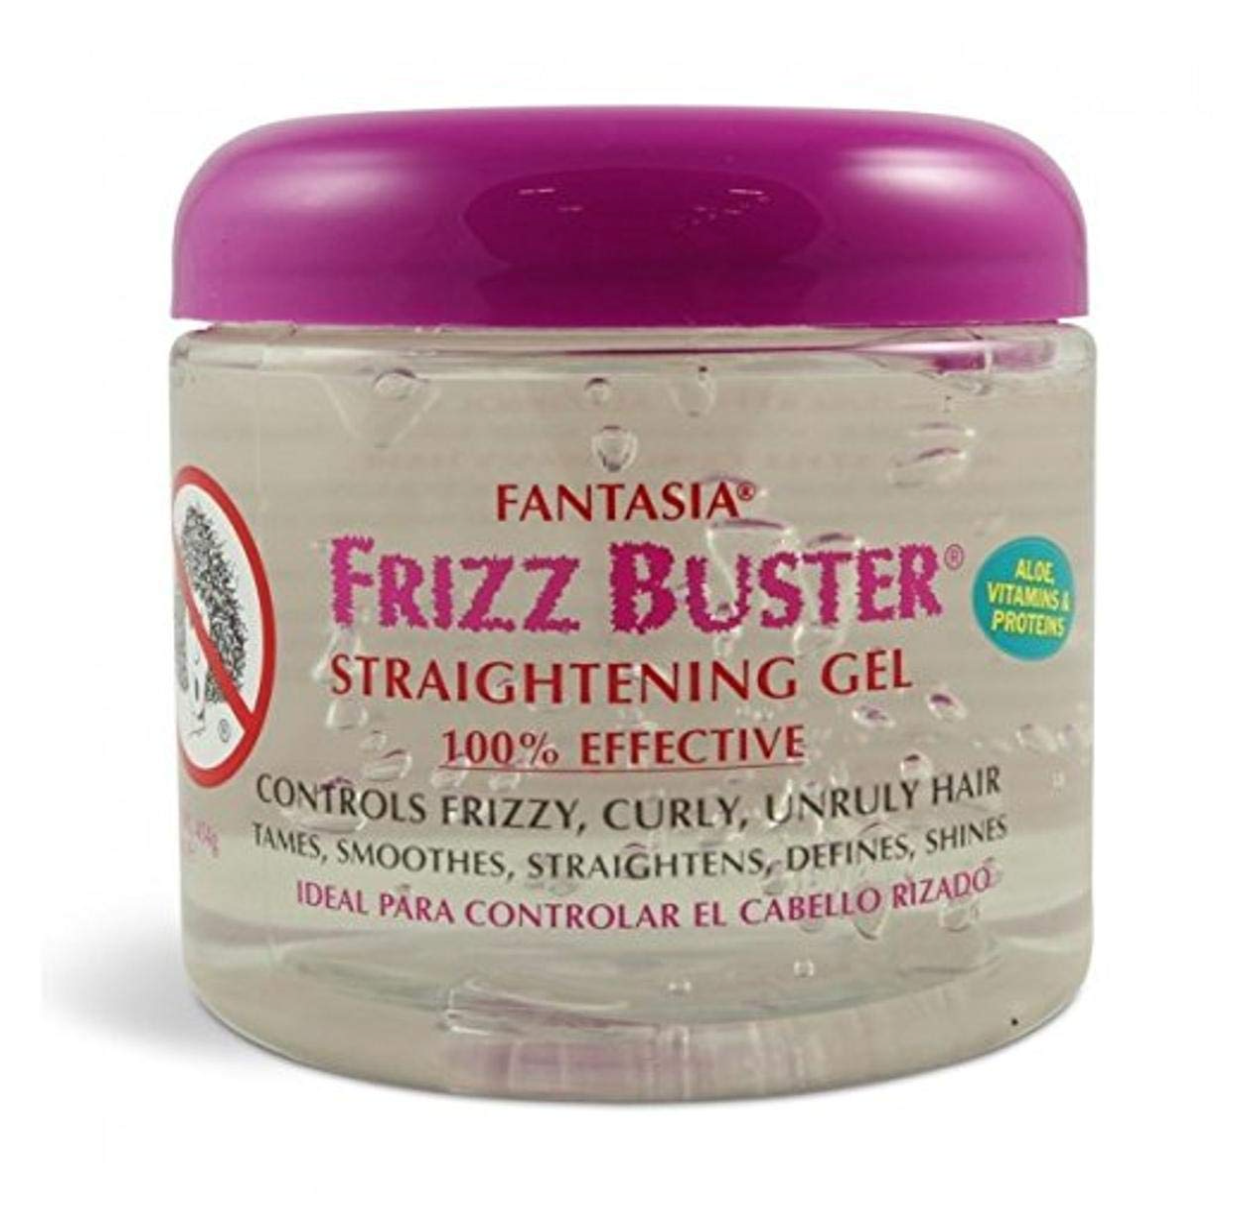 Fantasia Frizz Buster Straightening Gel